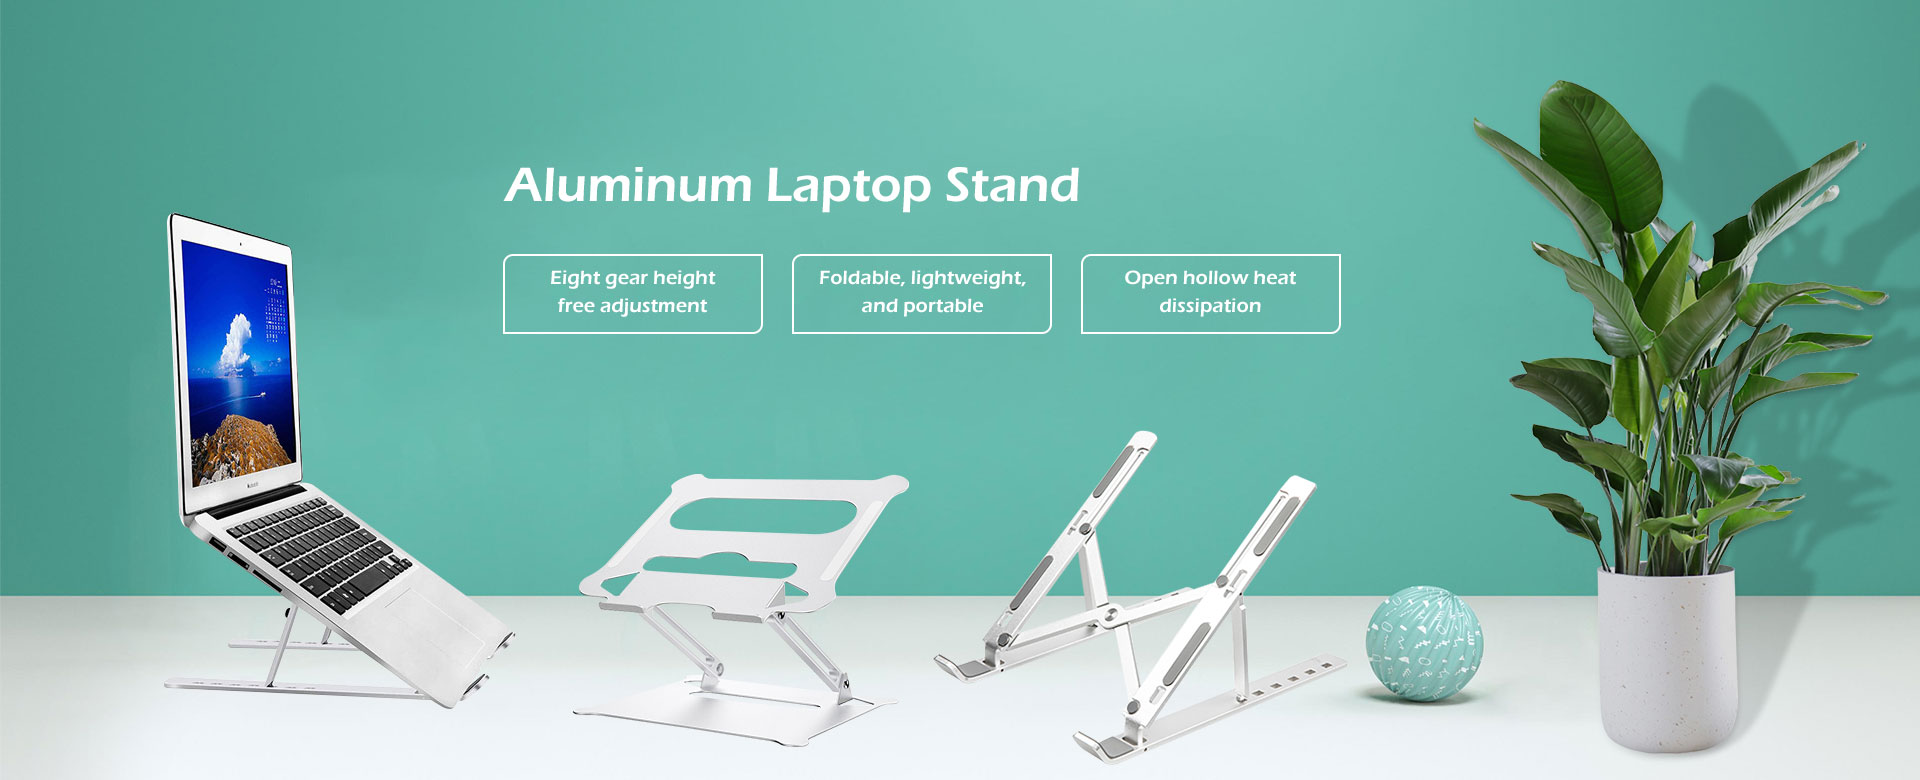 China Aluminum Laptop Stand ຜູ້ຜະລິດ